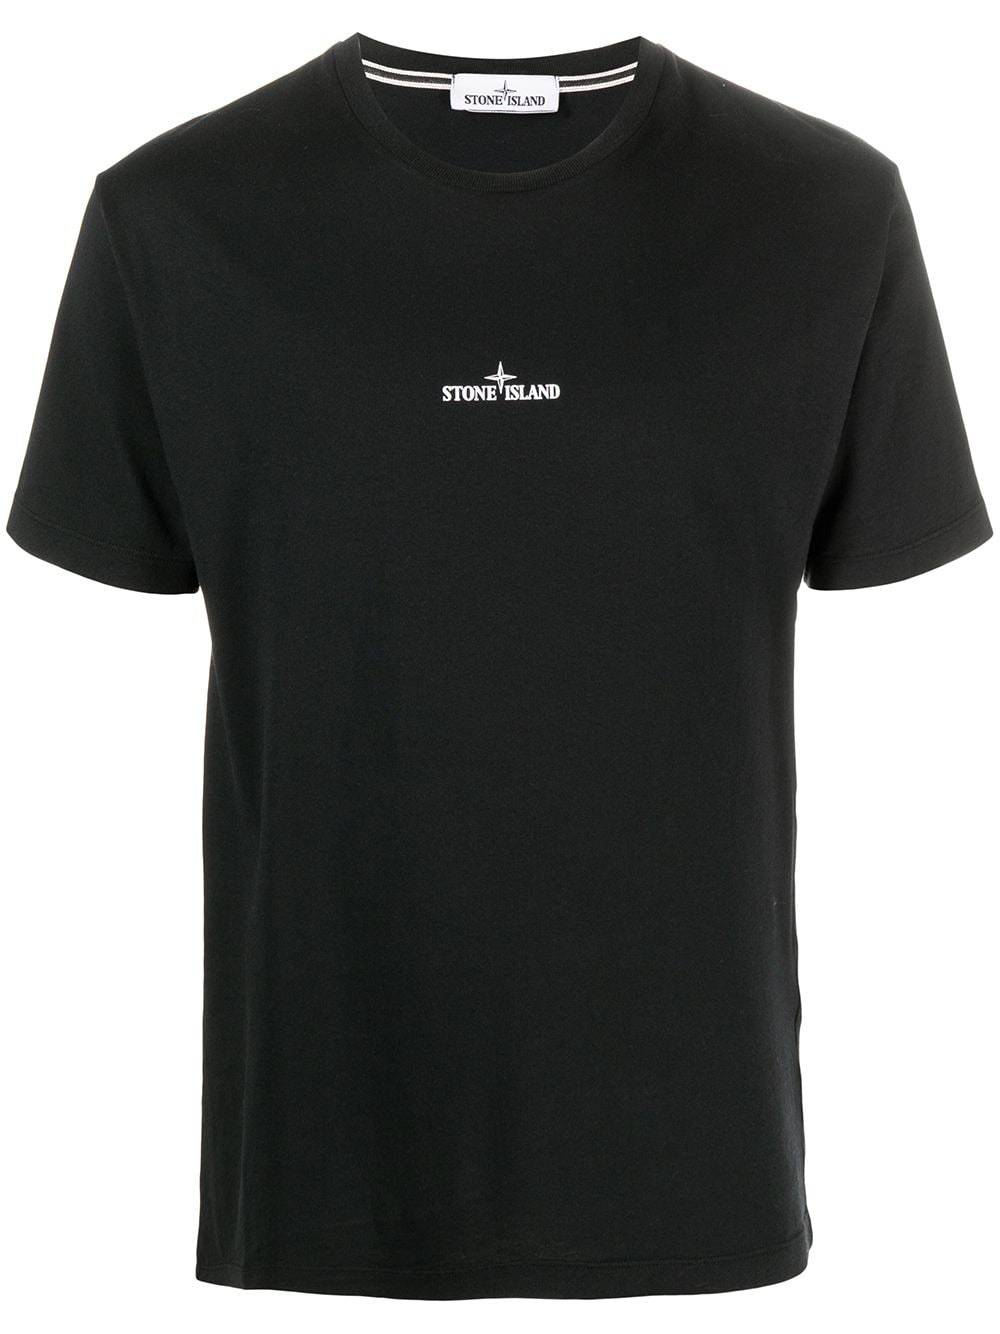 STONE ISLAND Back Marble One Print T-Shirt Black - MAISONDEFASHION.COM